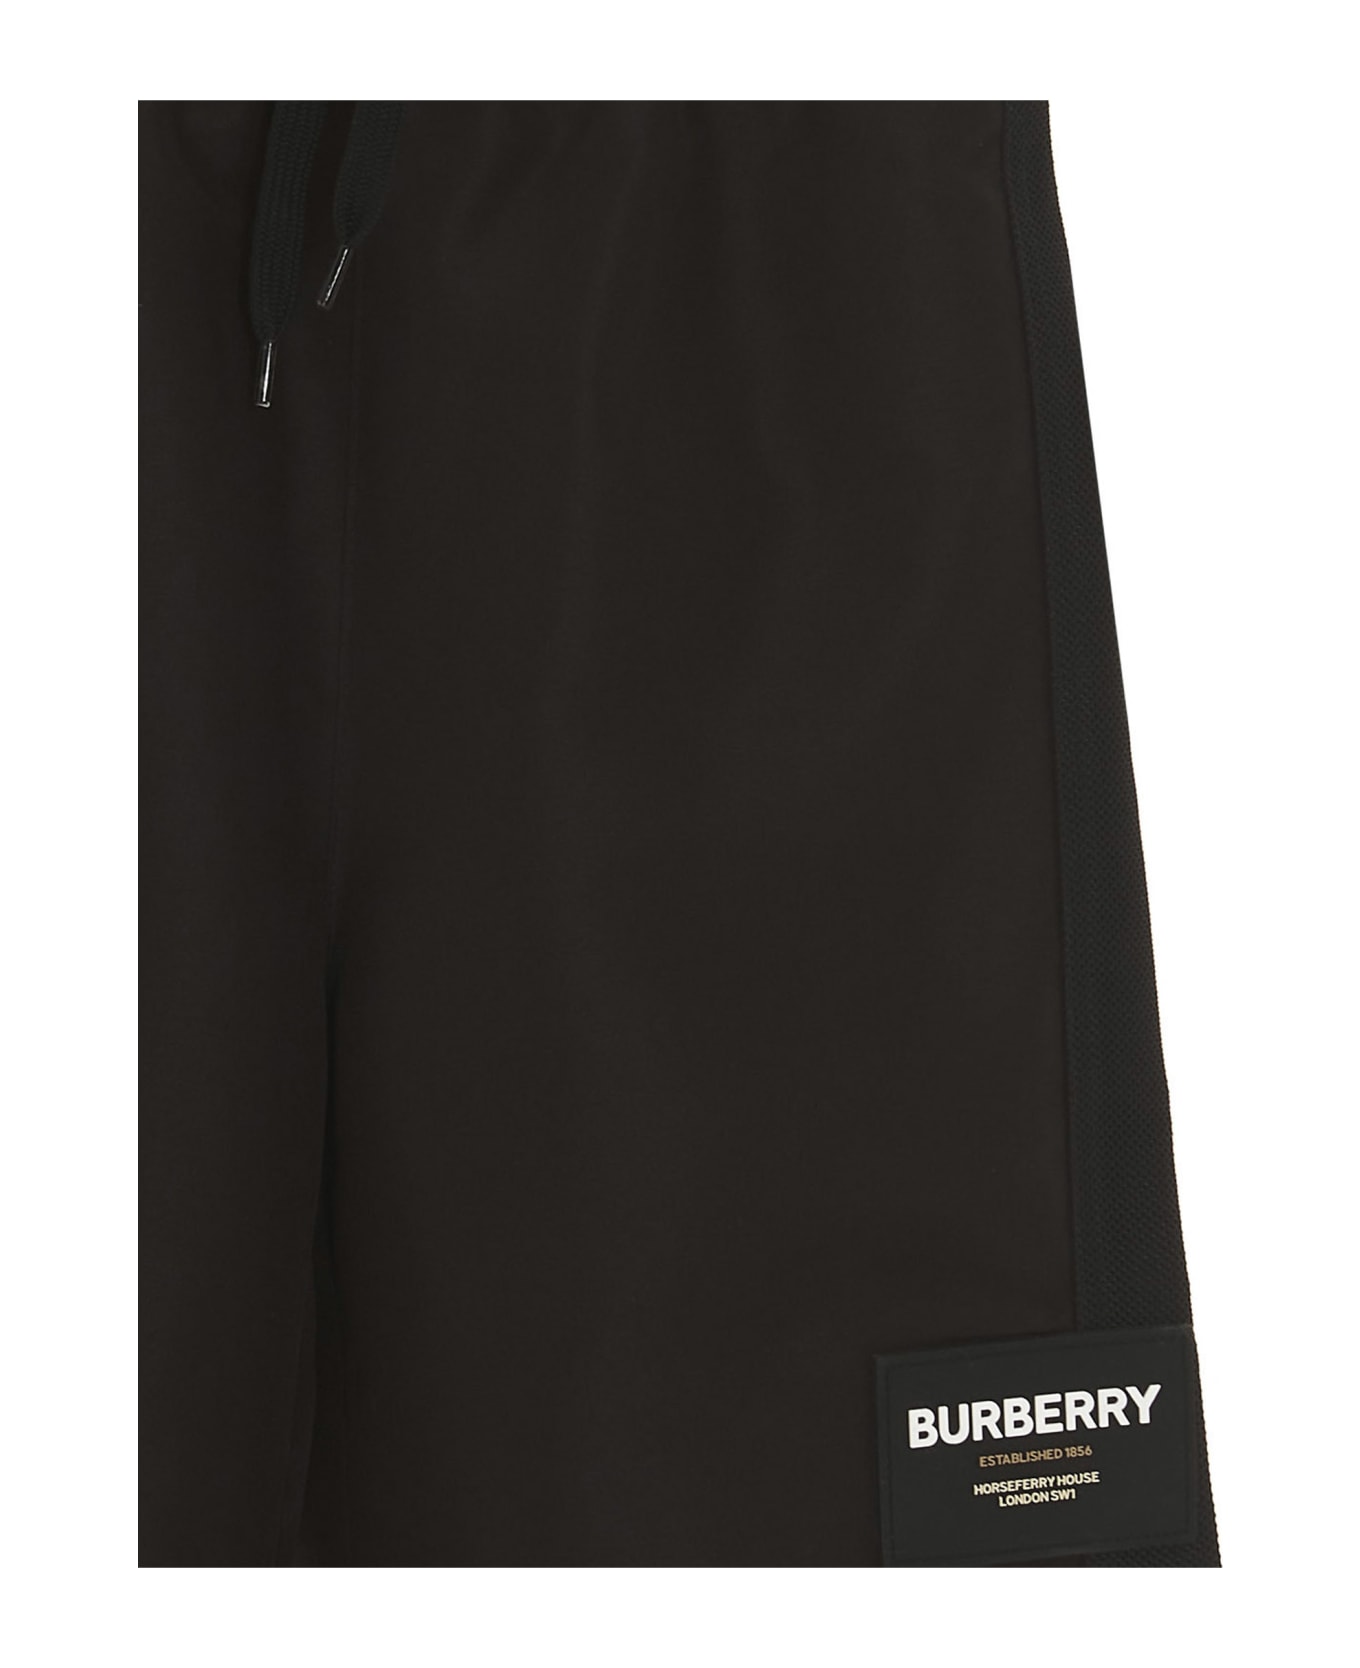 Burberry 'malcolm' Swimming Trunks - Black  